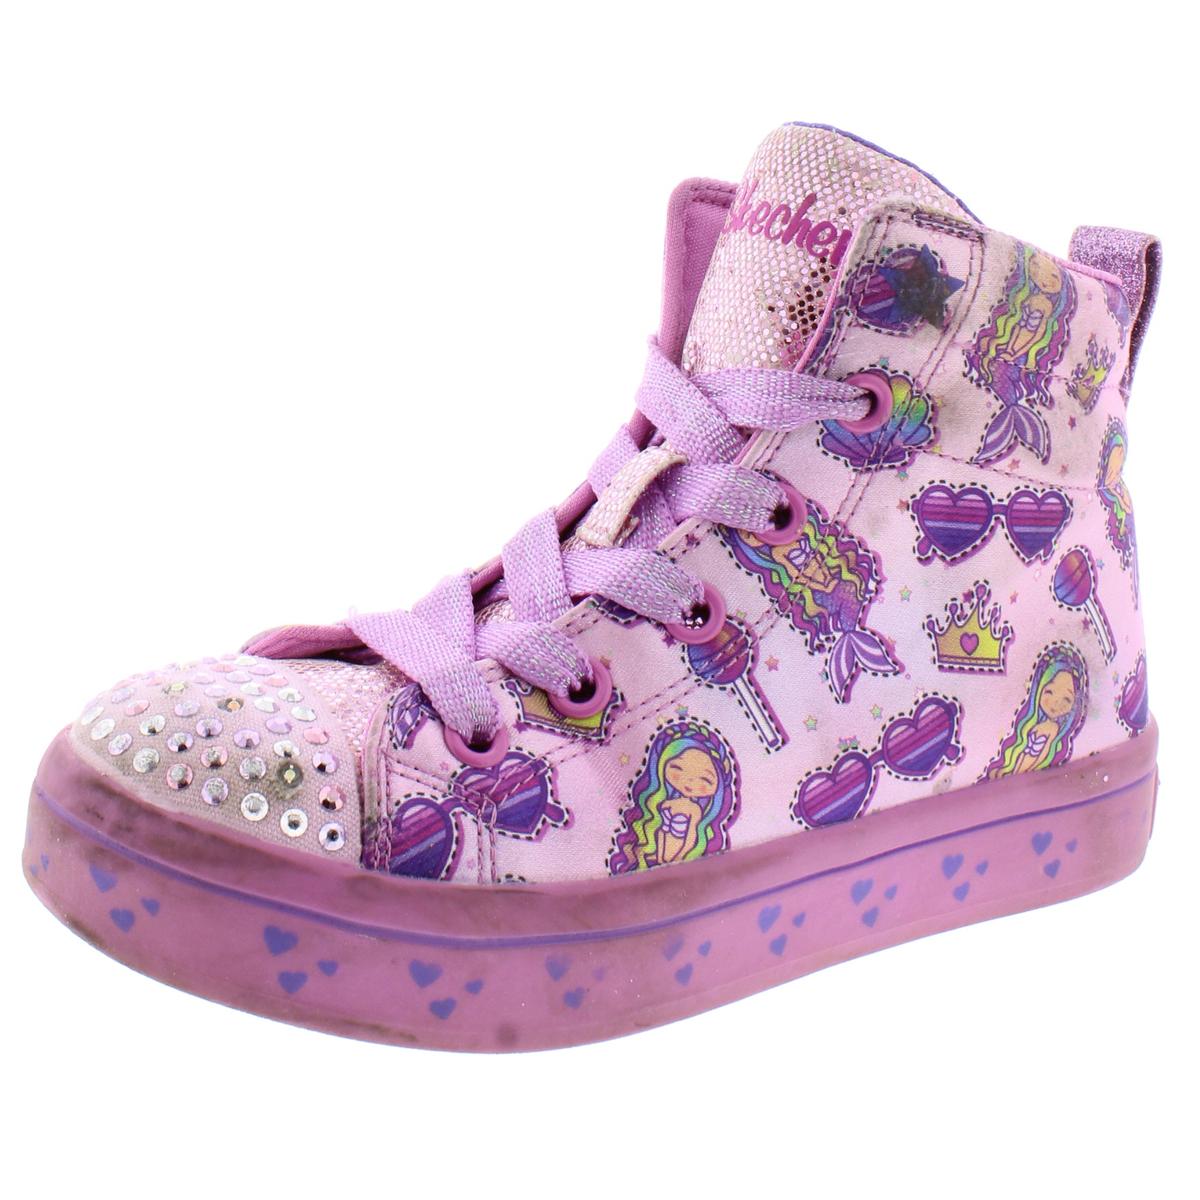 Twinkle Toes by Skechers Girls Mermaid Party Purple Sneakers Shoes BHFO ...